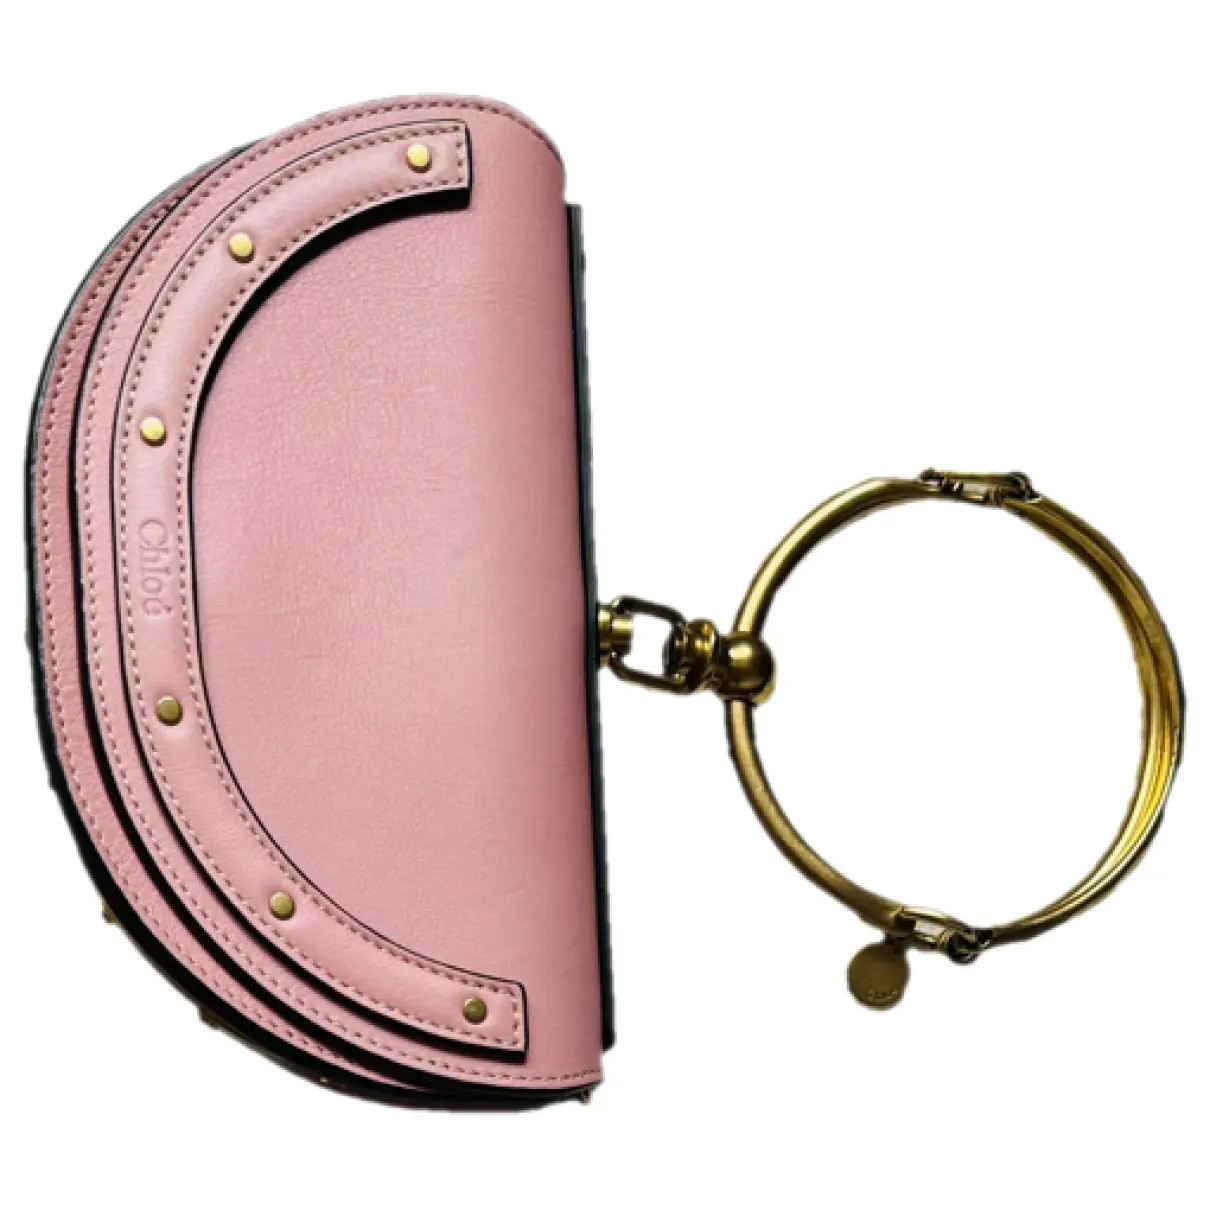 Bracelet Nile leather mini bag